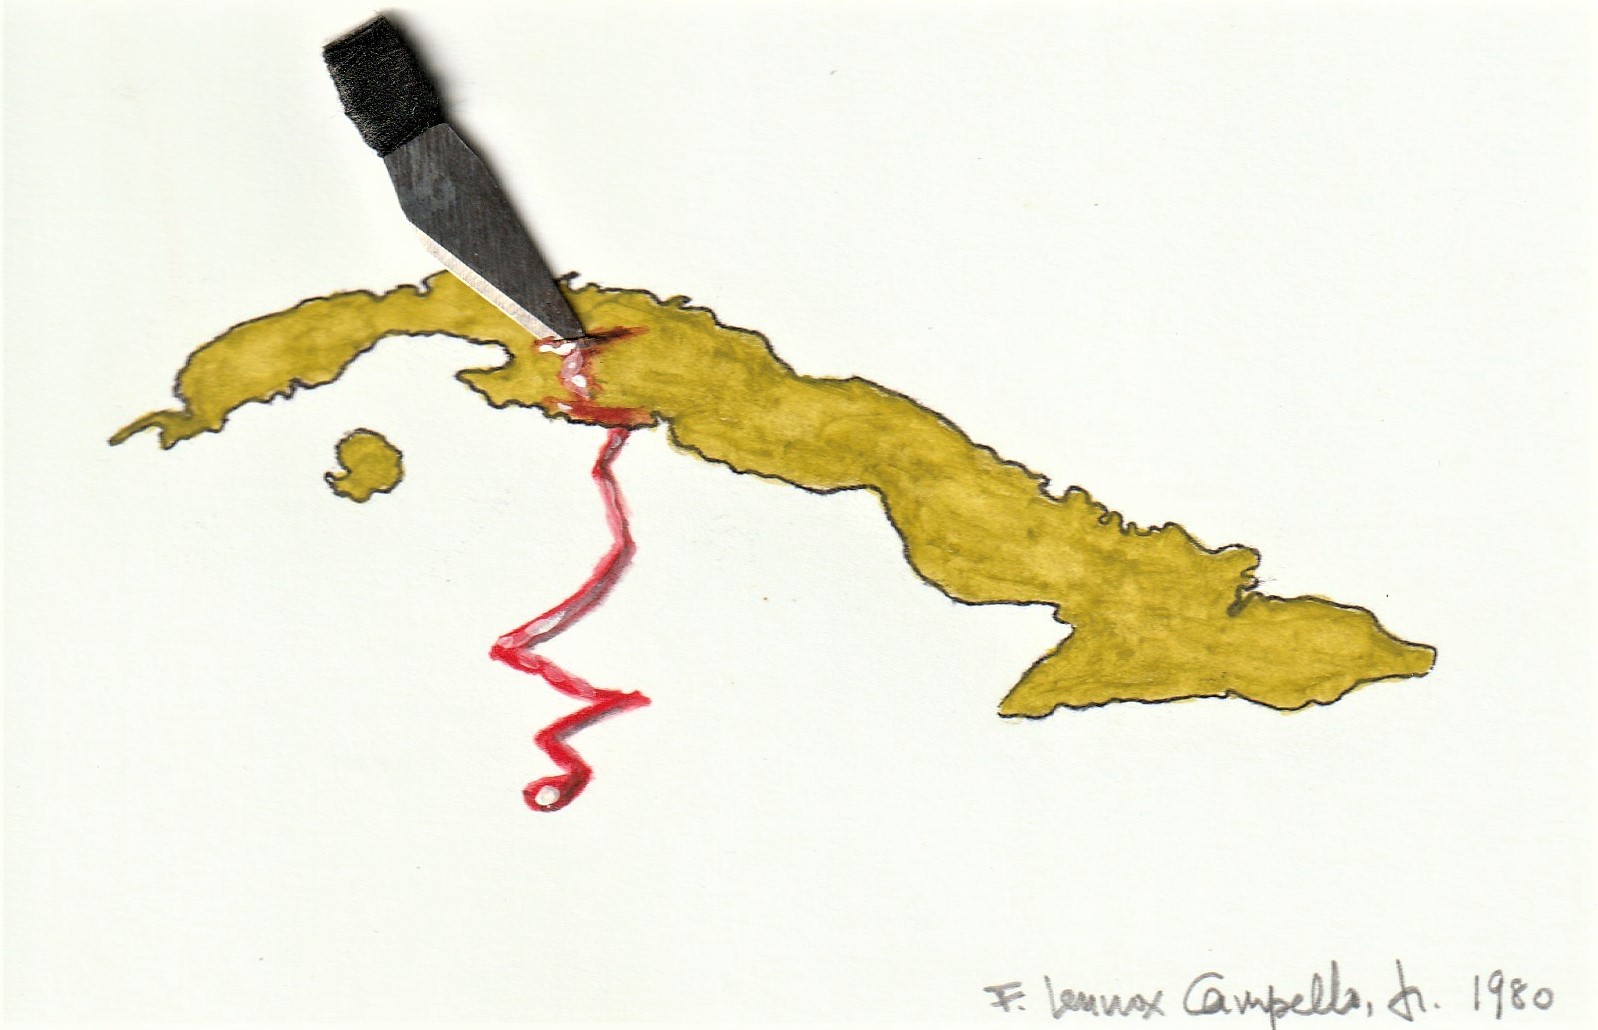 Original 1980 Cuban artwork by Florencio Lennox Campello